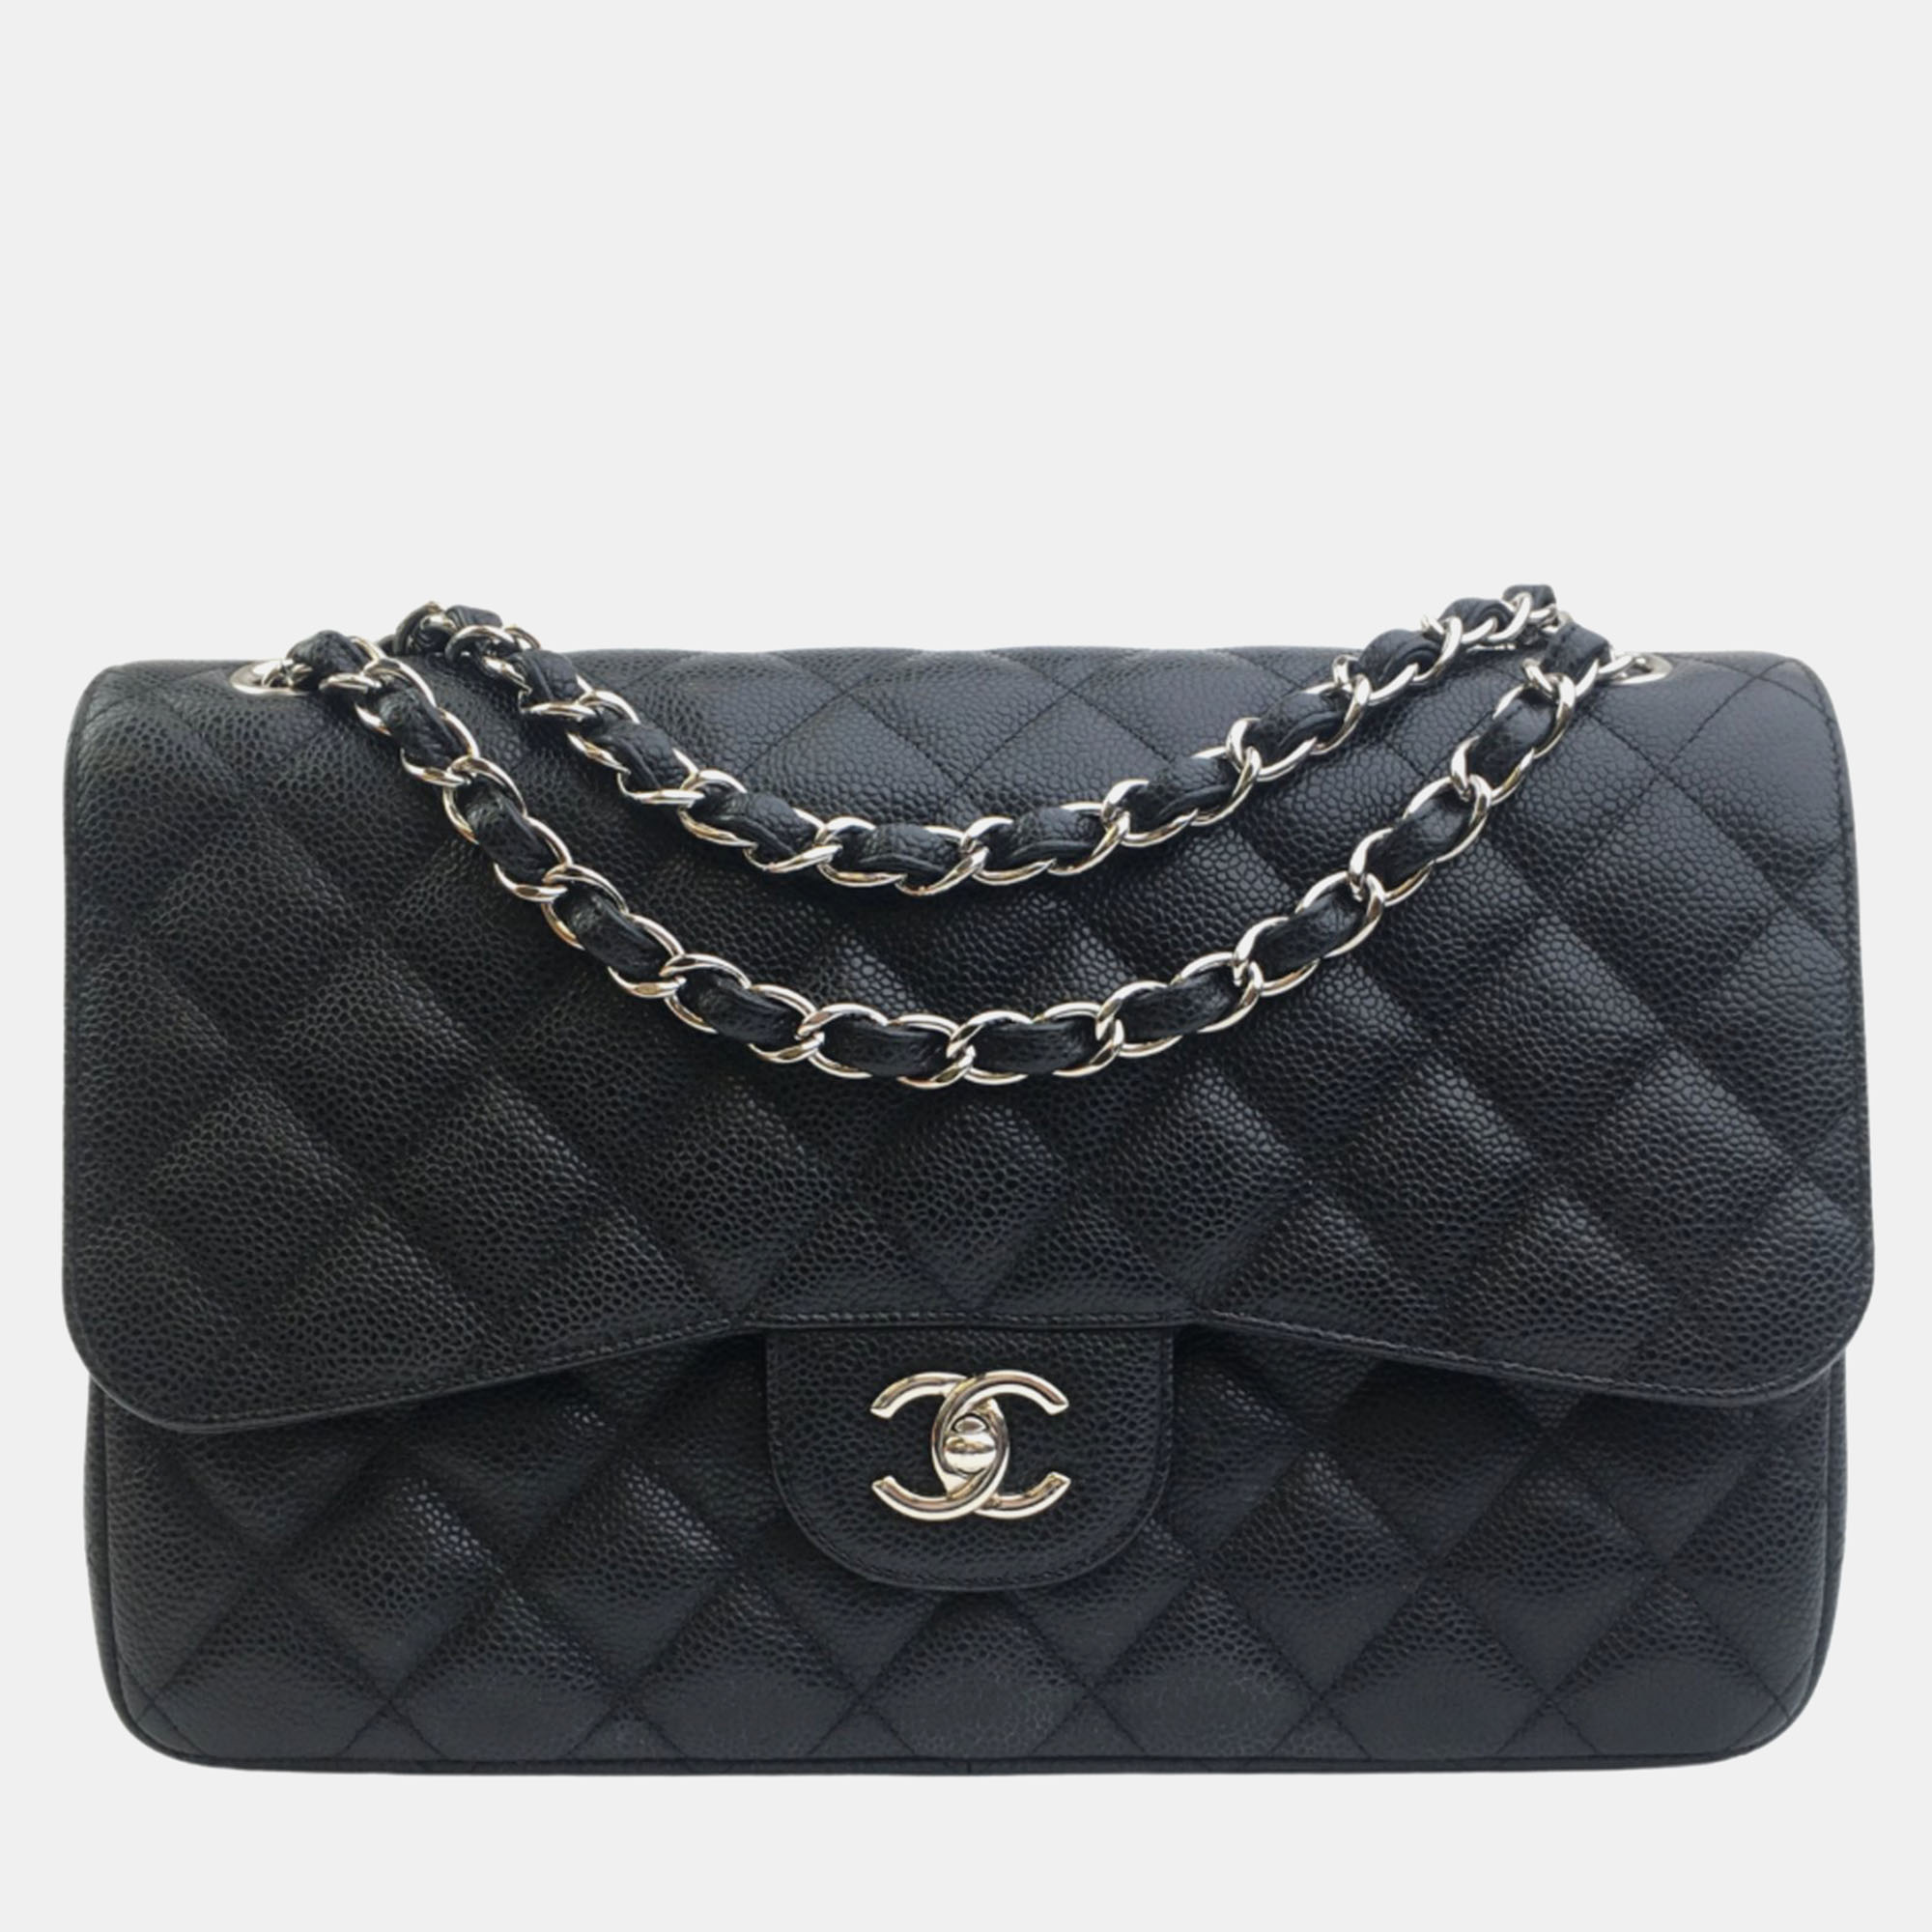 Chanel black caviar leather jumbo classic double flap shoulder bag